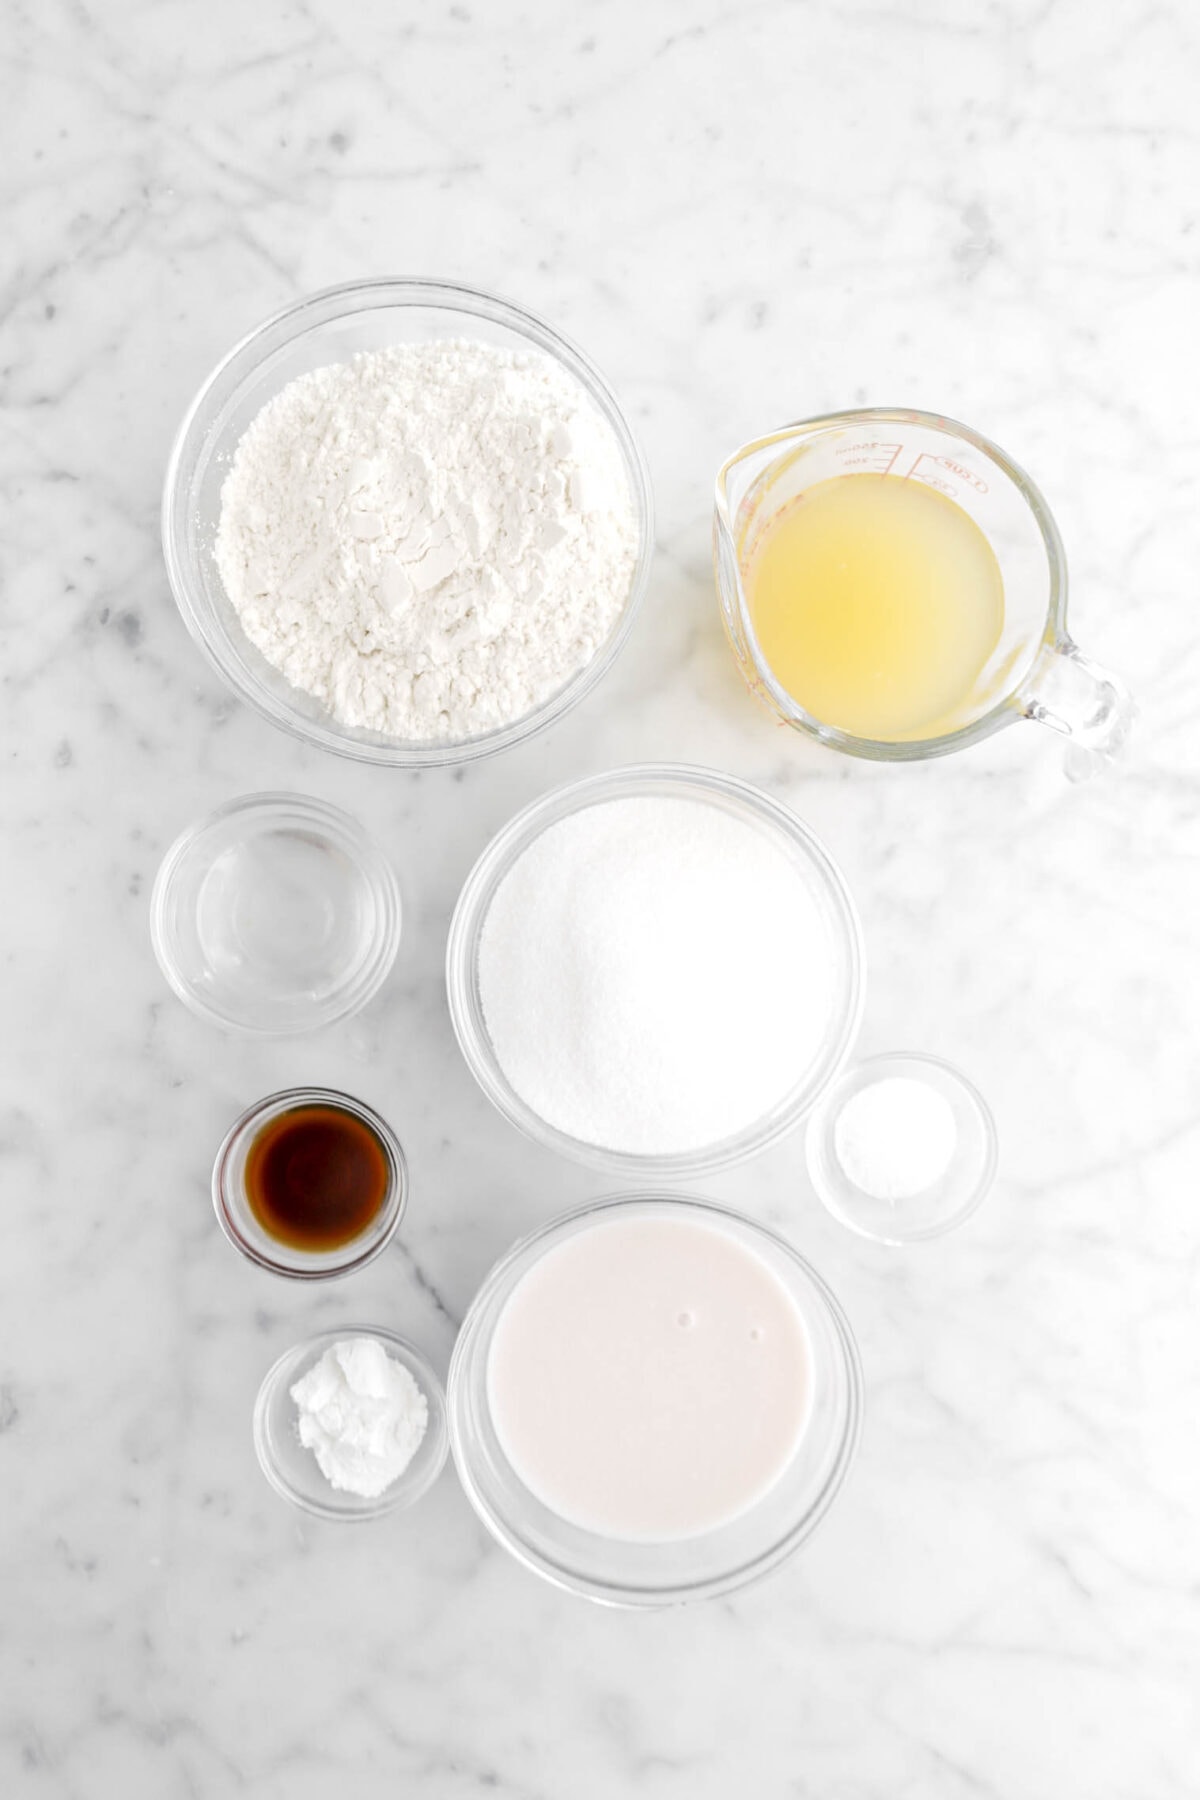 flour, aquafaba, coconut oil, sugar, salt, vanilla, coconut milk, and baking powder on marble surface